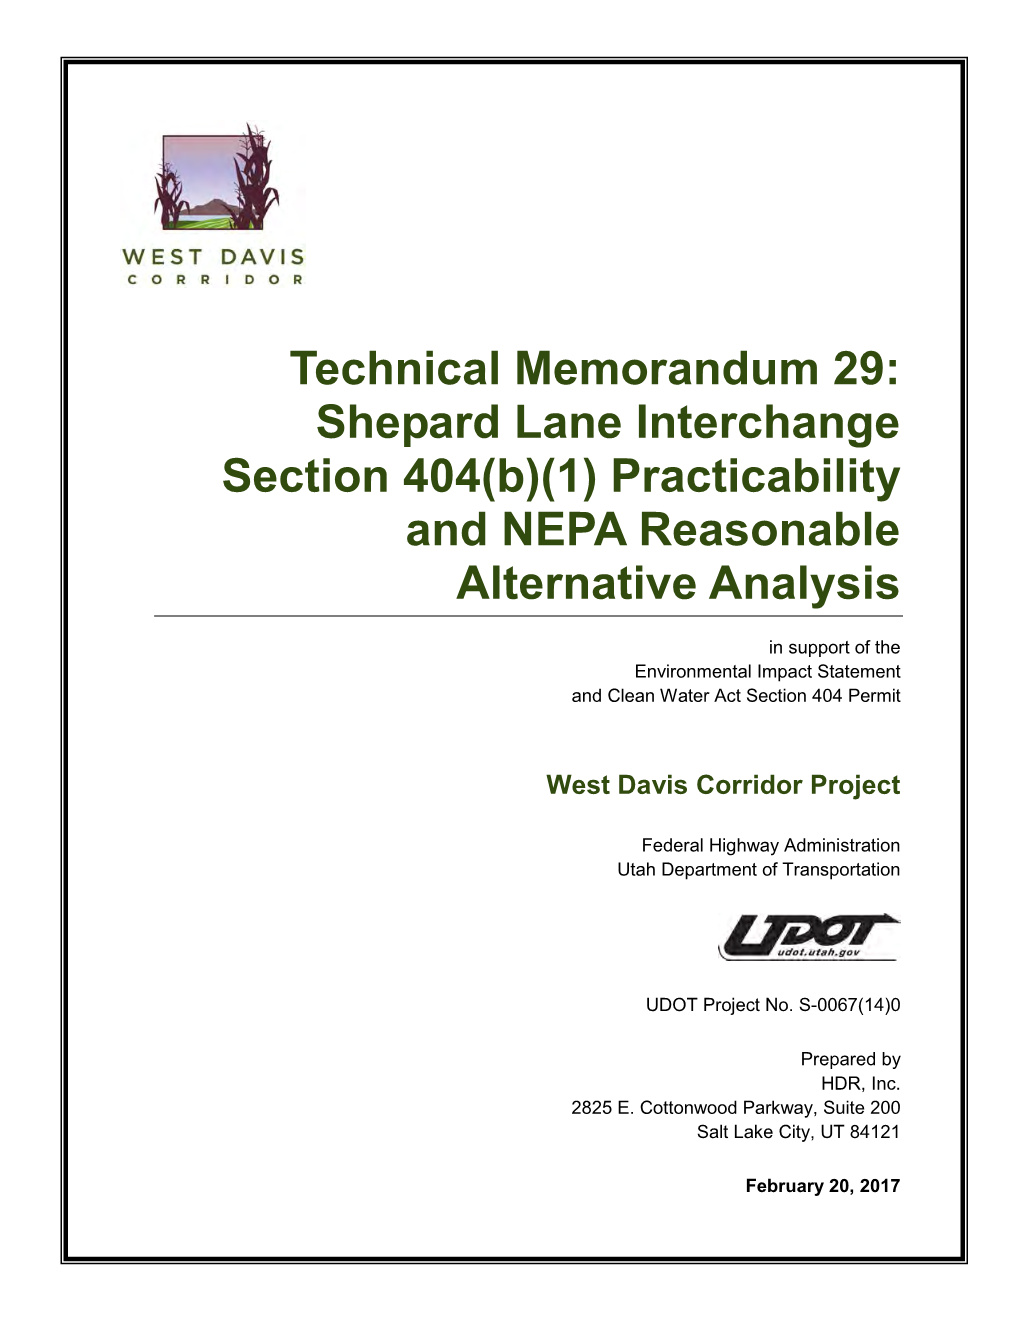 Shepard Lane Interchange Section 404(B)(1) Practicability and NEPA Reasonable Alternative Analysis